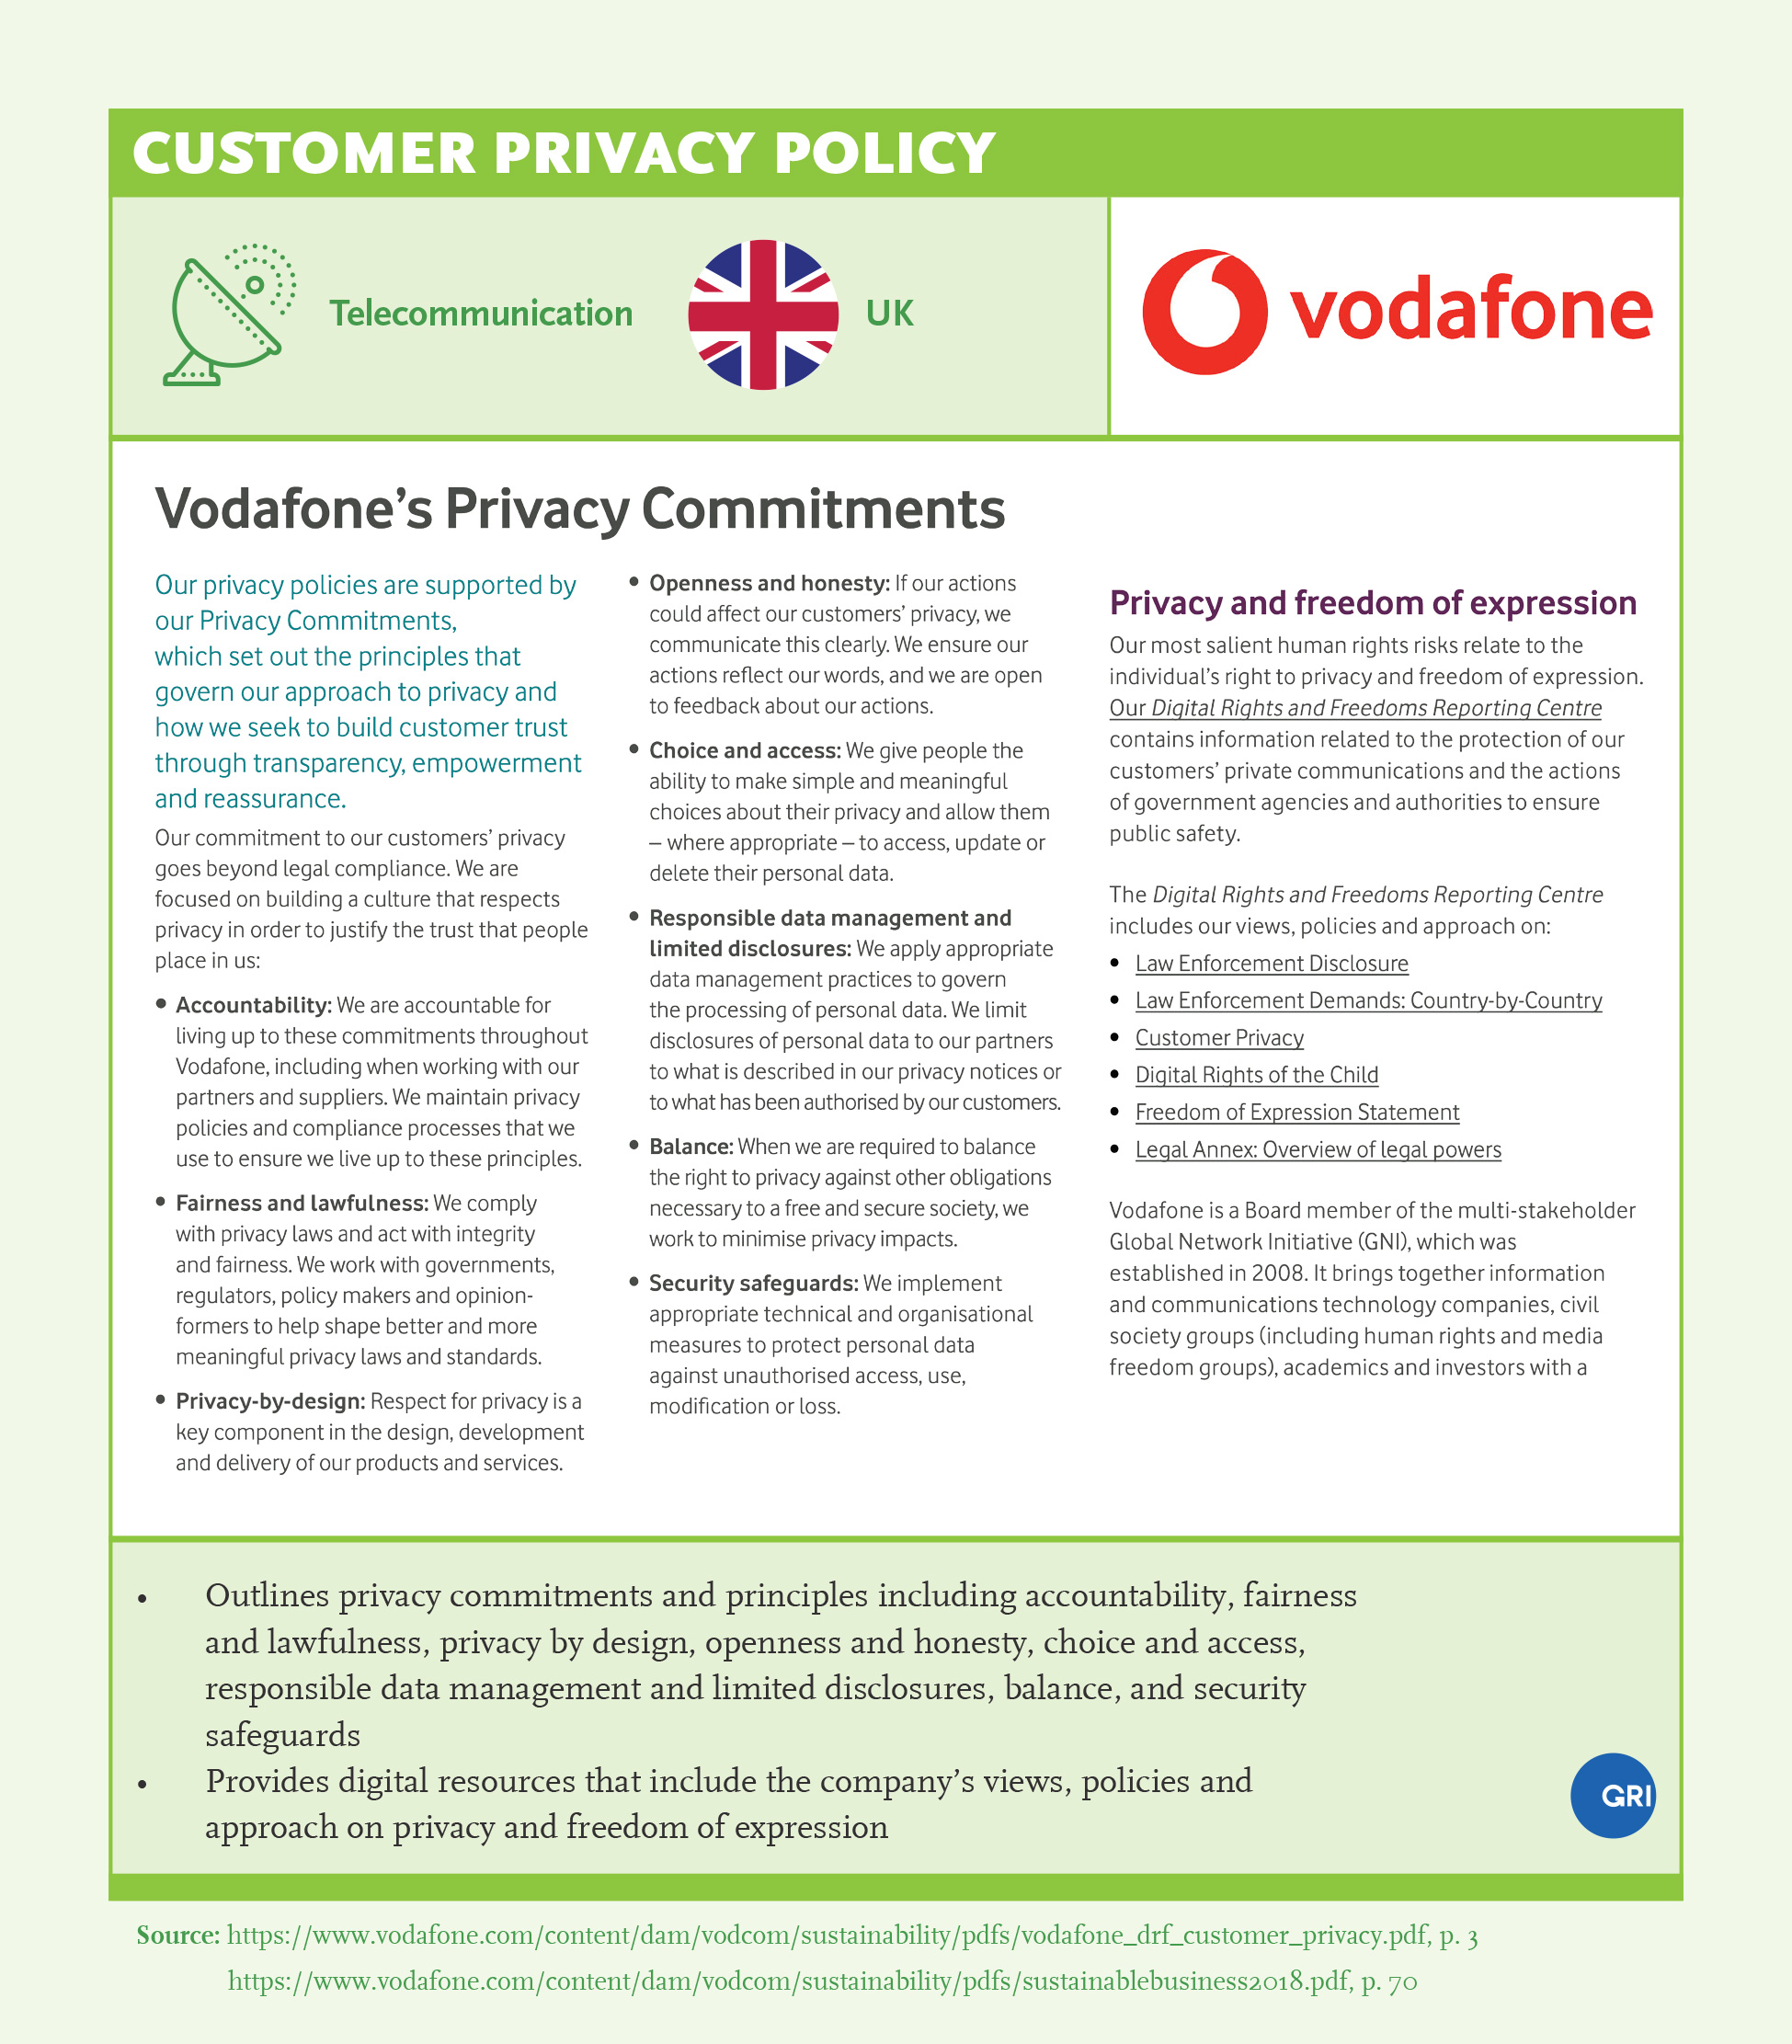 Customer Privacy Policy: Vodafone